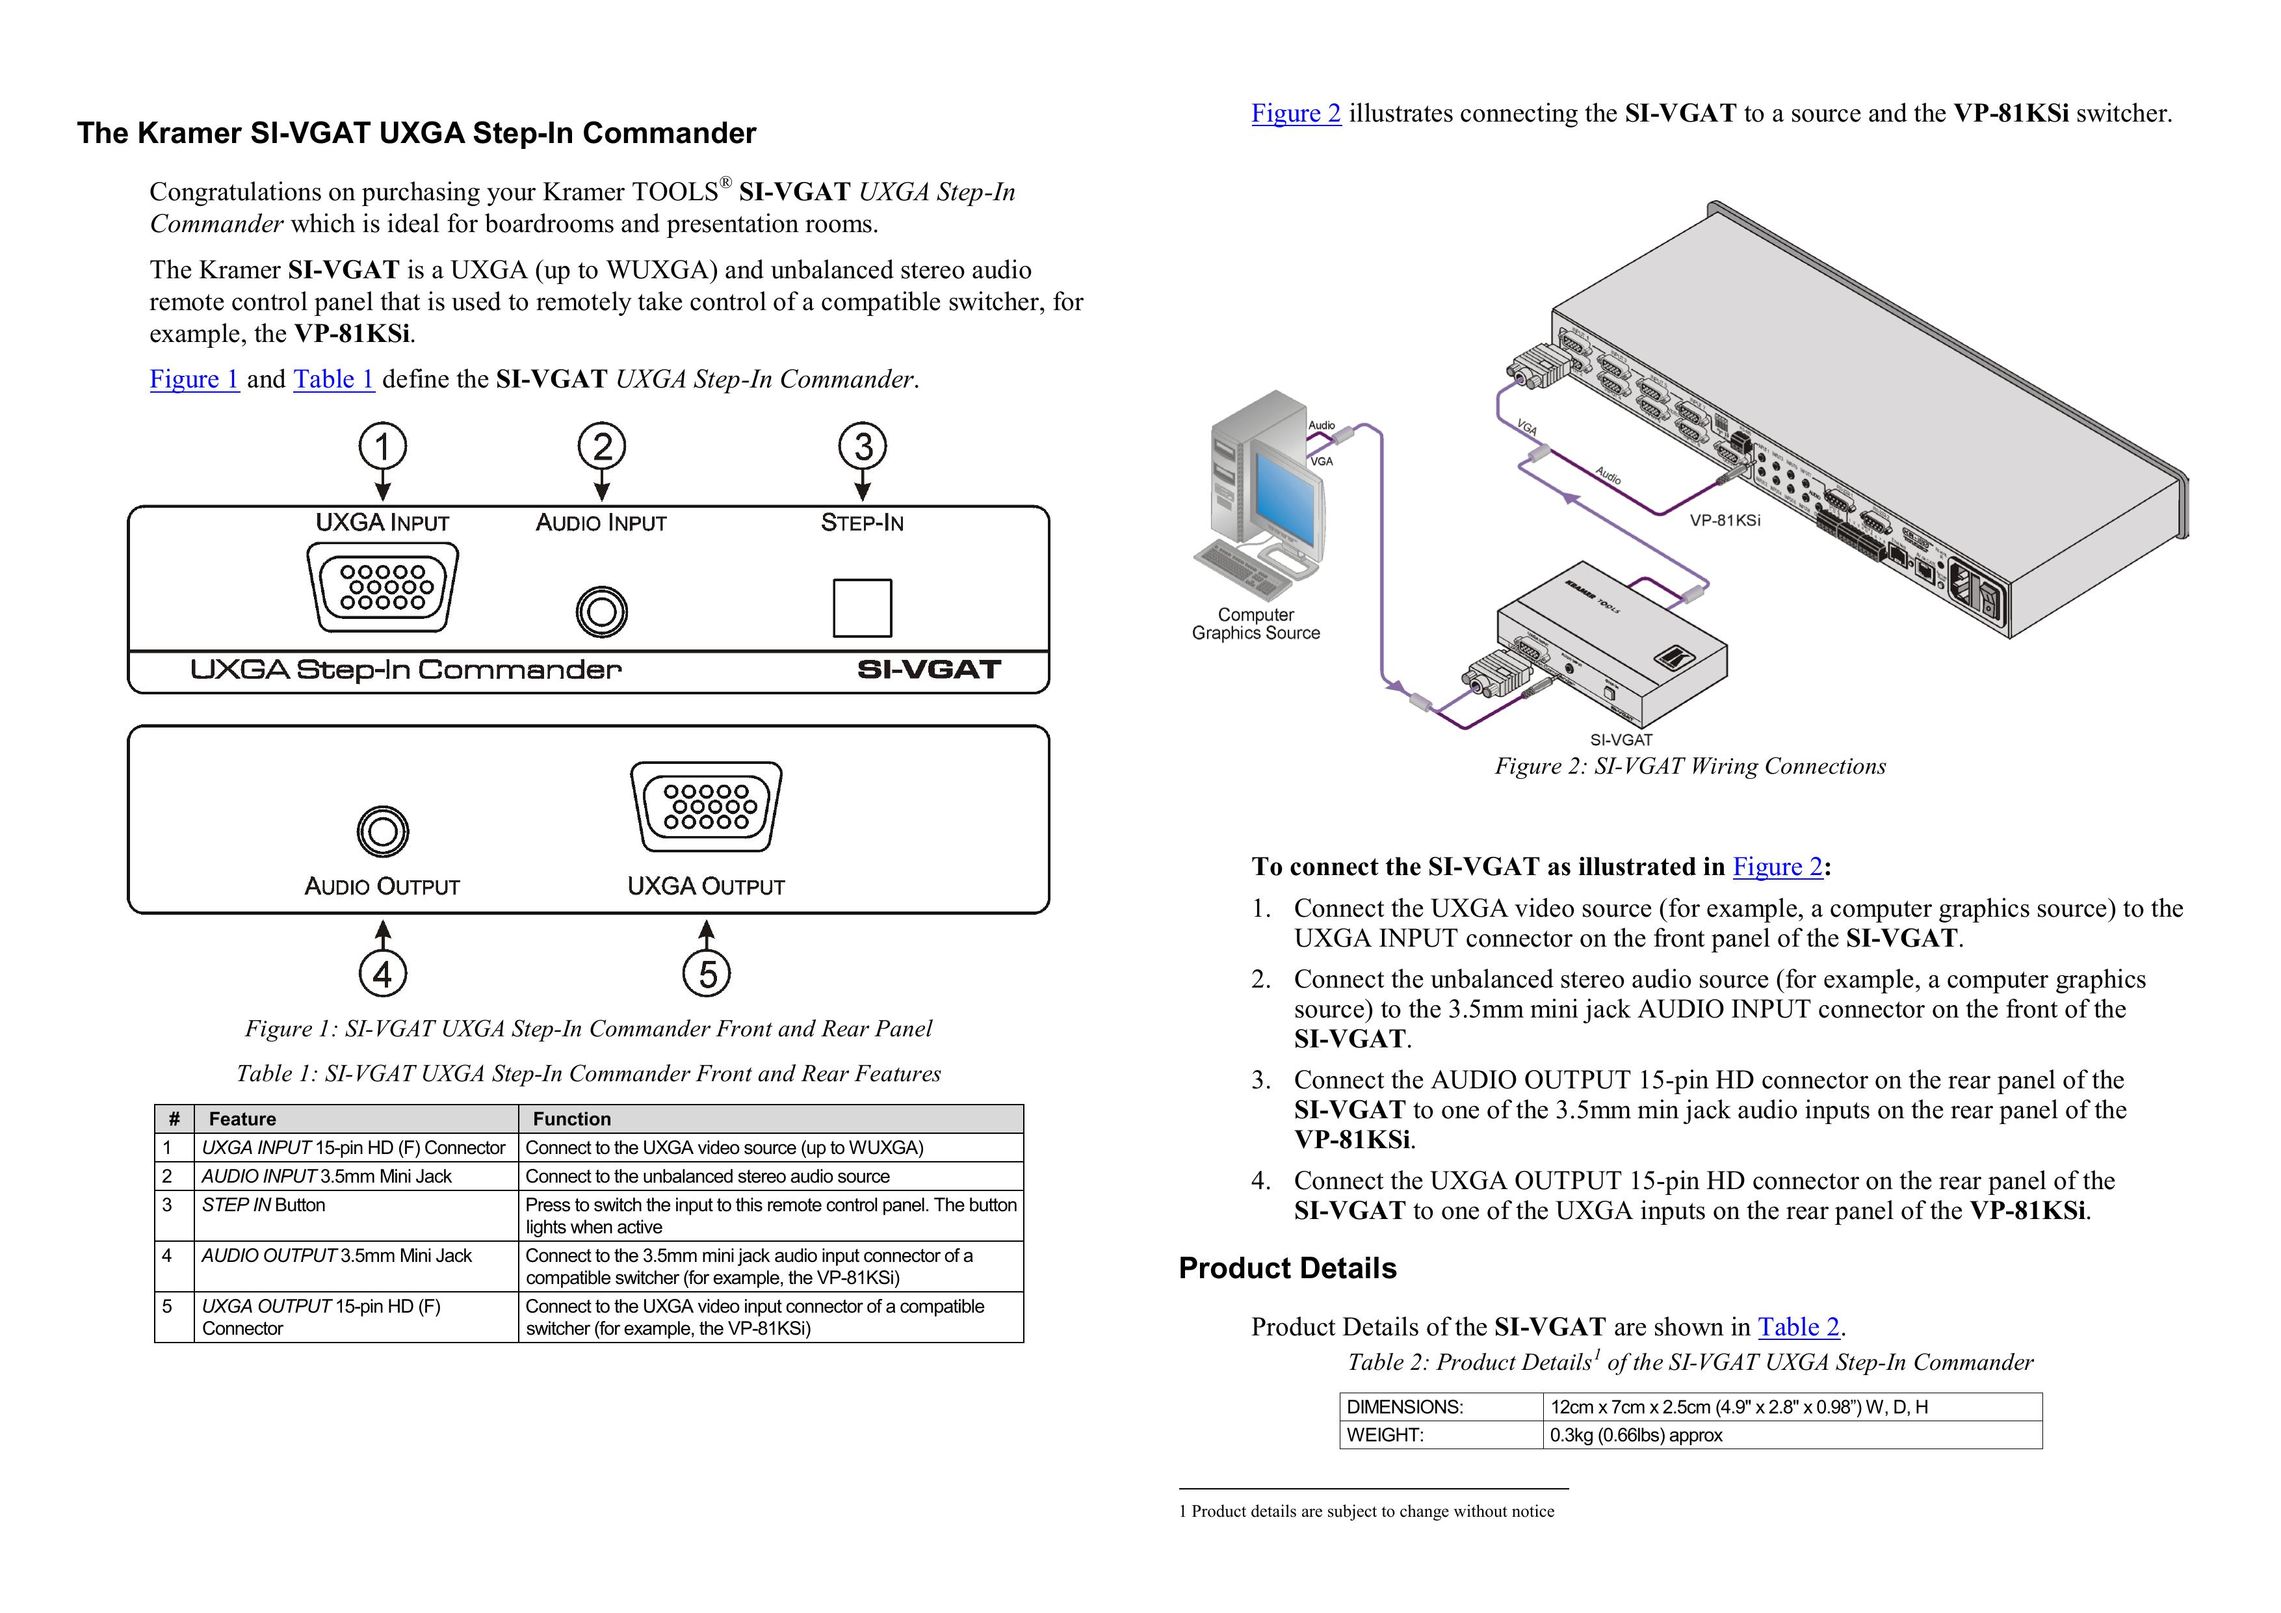 Kramer Electronics SI-VGAT UXGA Switch User Manual